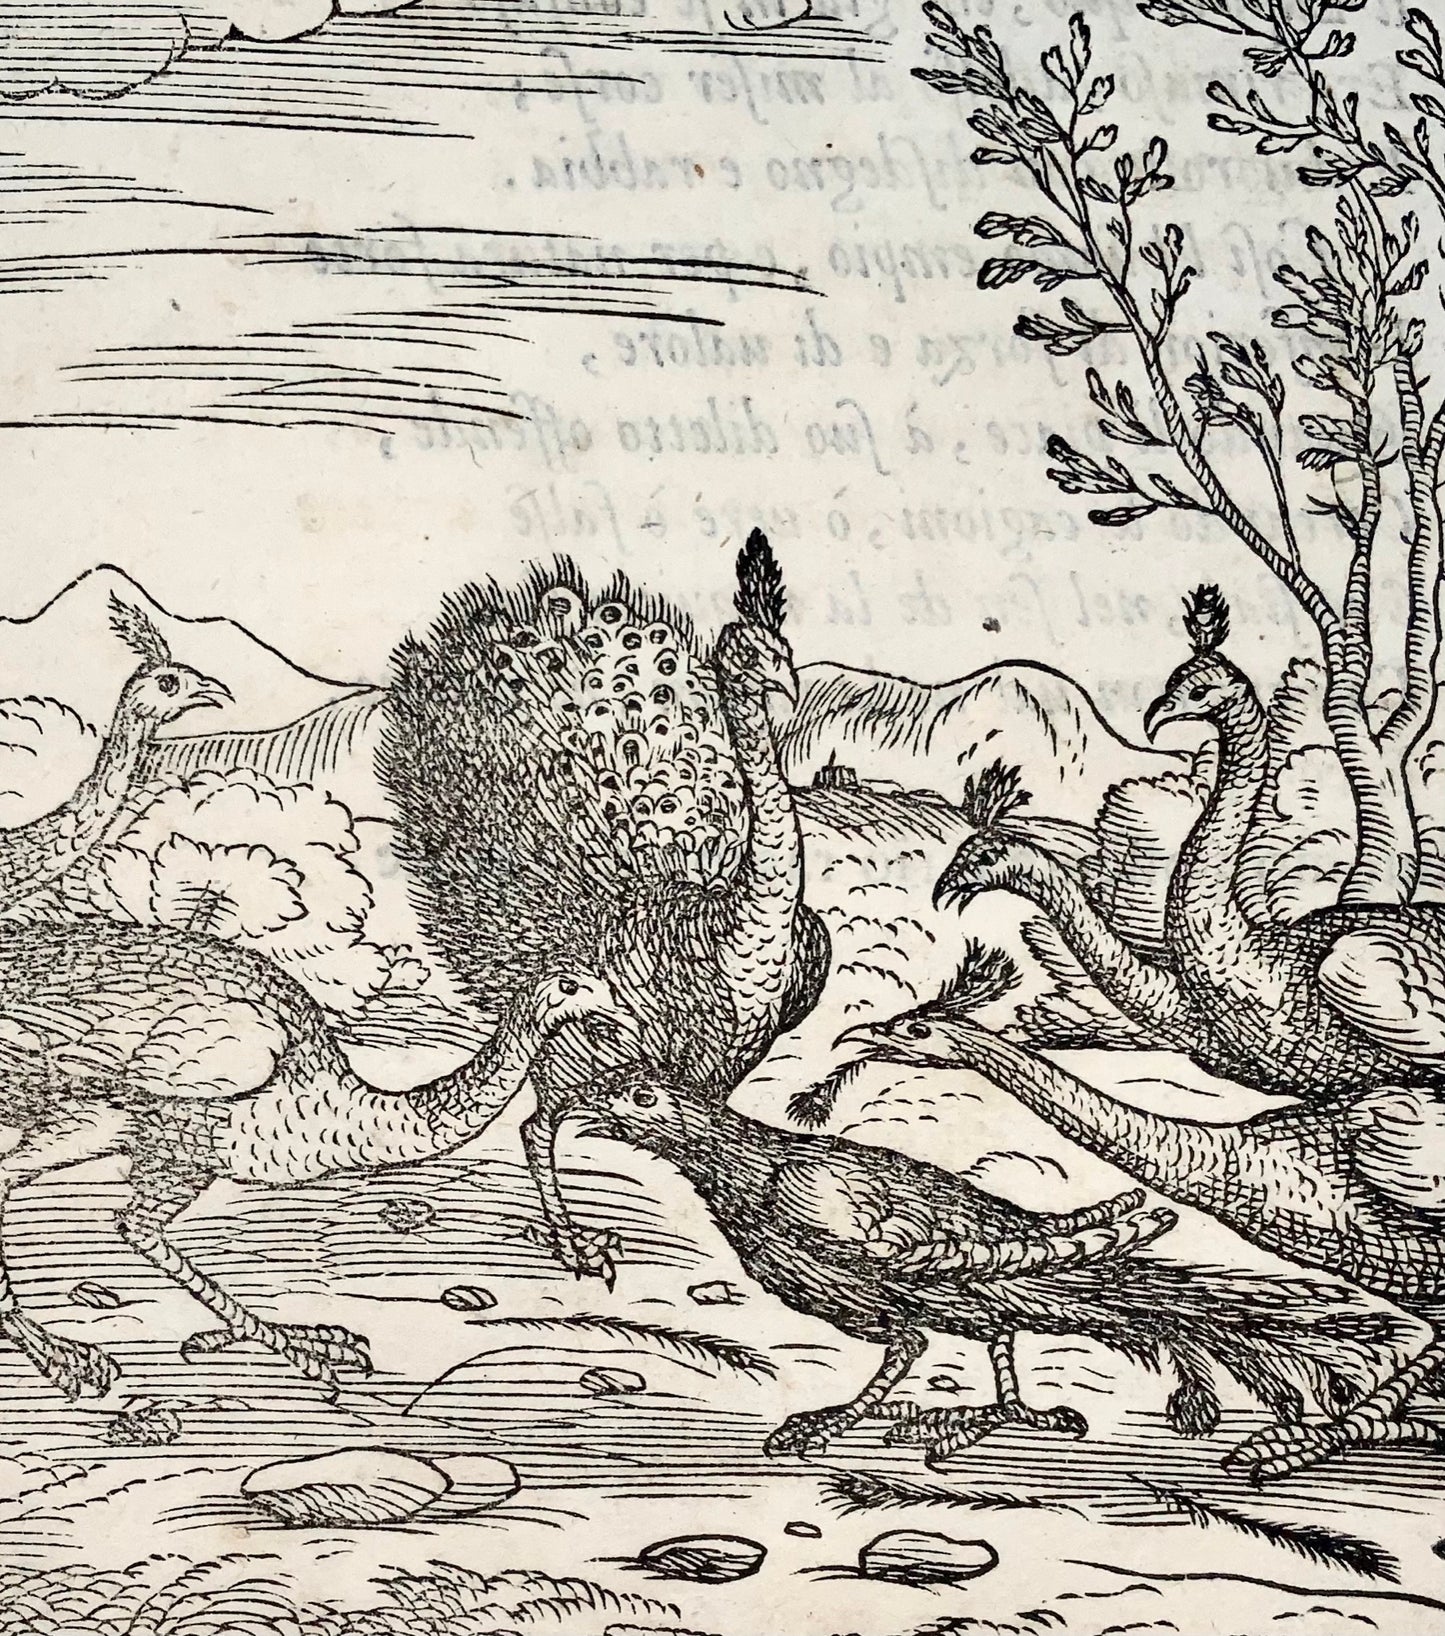 Gio. M. Verdizzotti (1525-1600); The Peacocks & the Crow - woodcut leaf 1570 - Fables